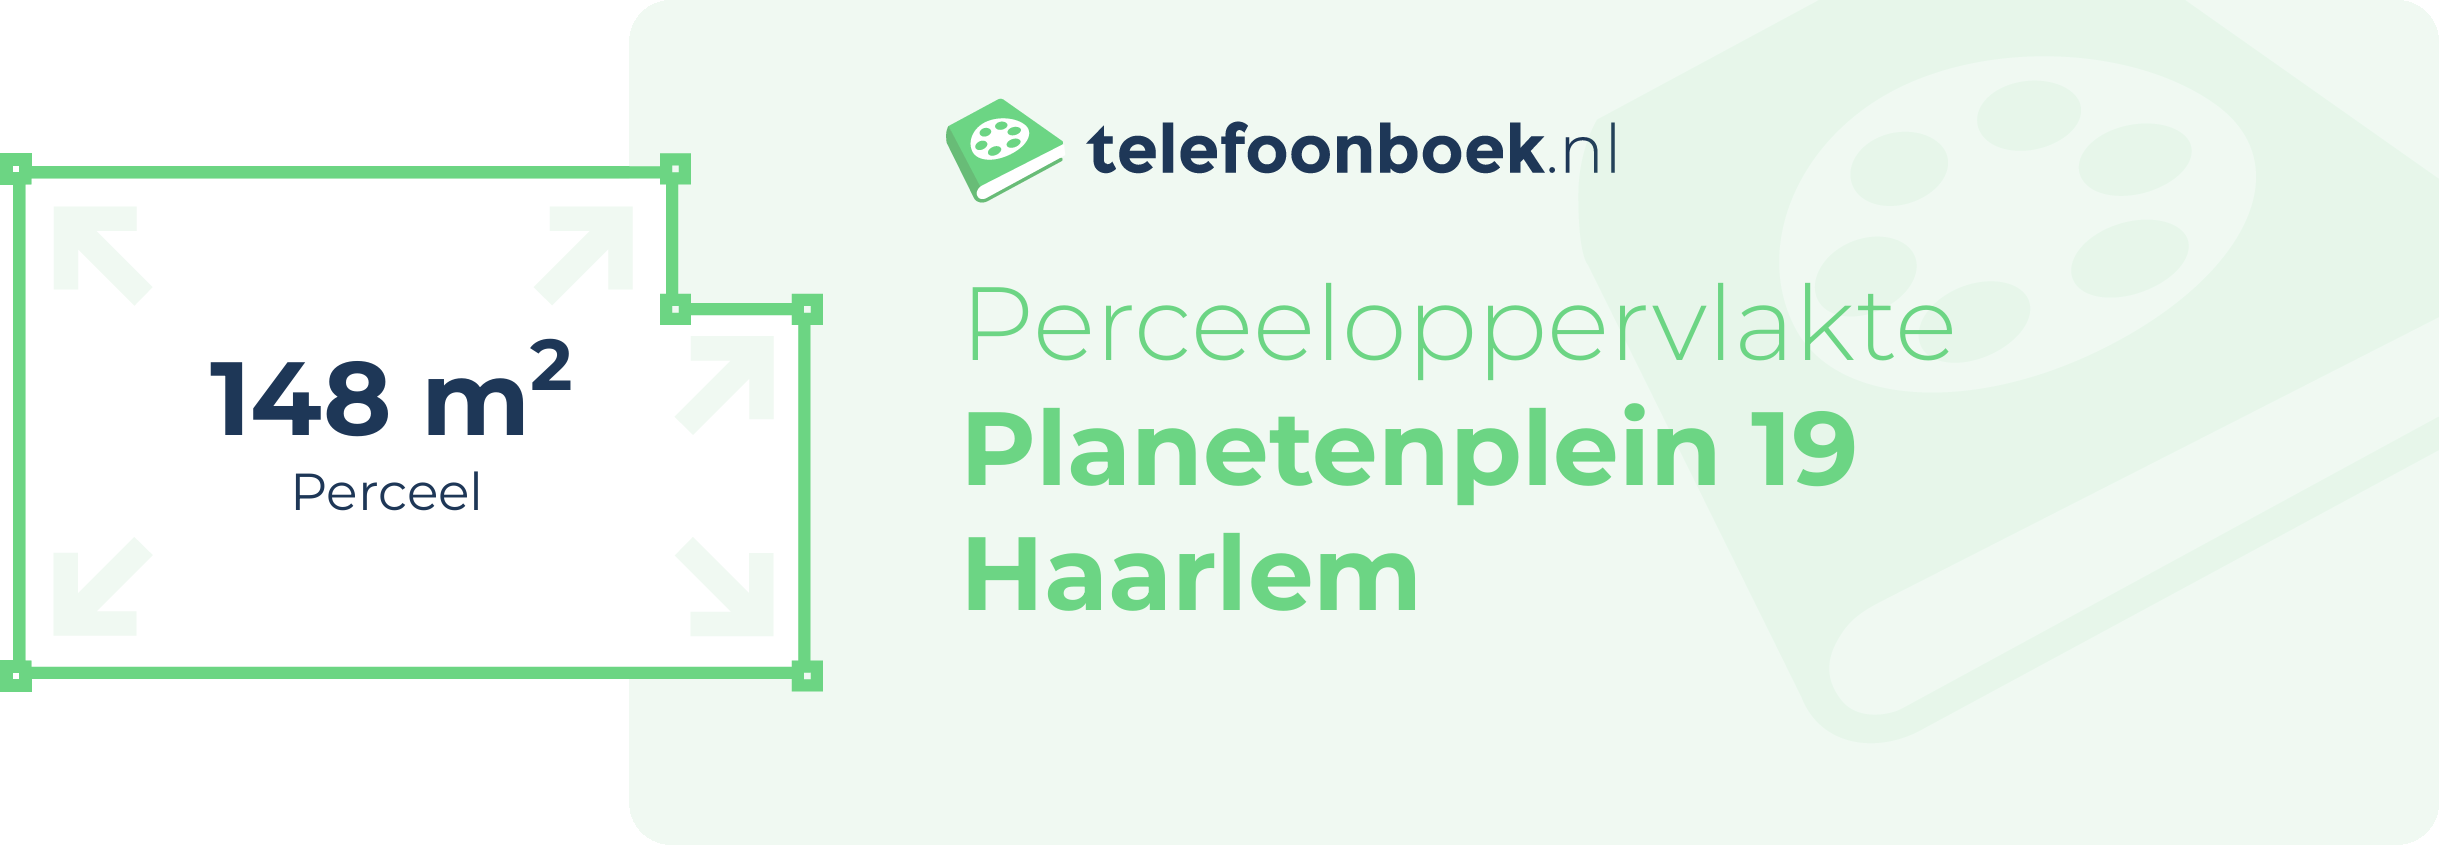 Perceeloppervlakte Planetenplein 19 Haarlem